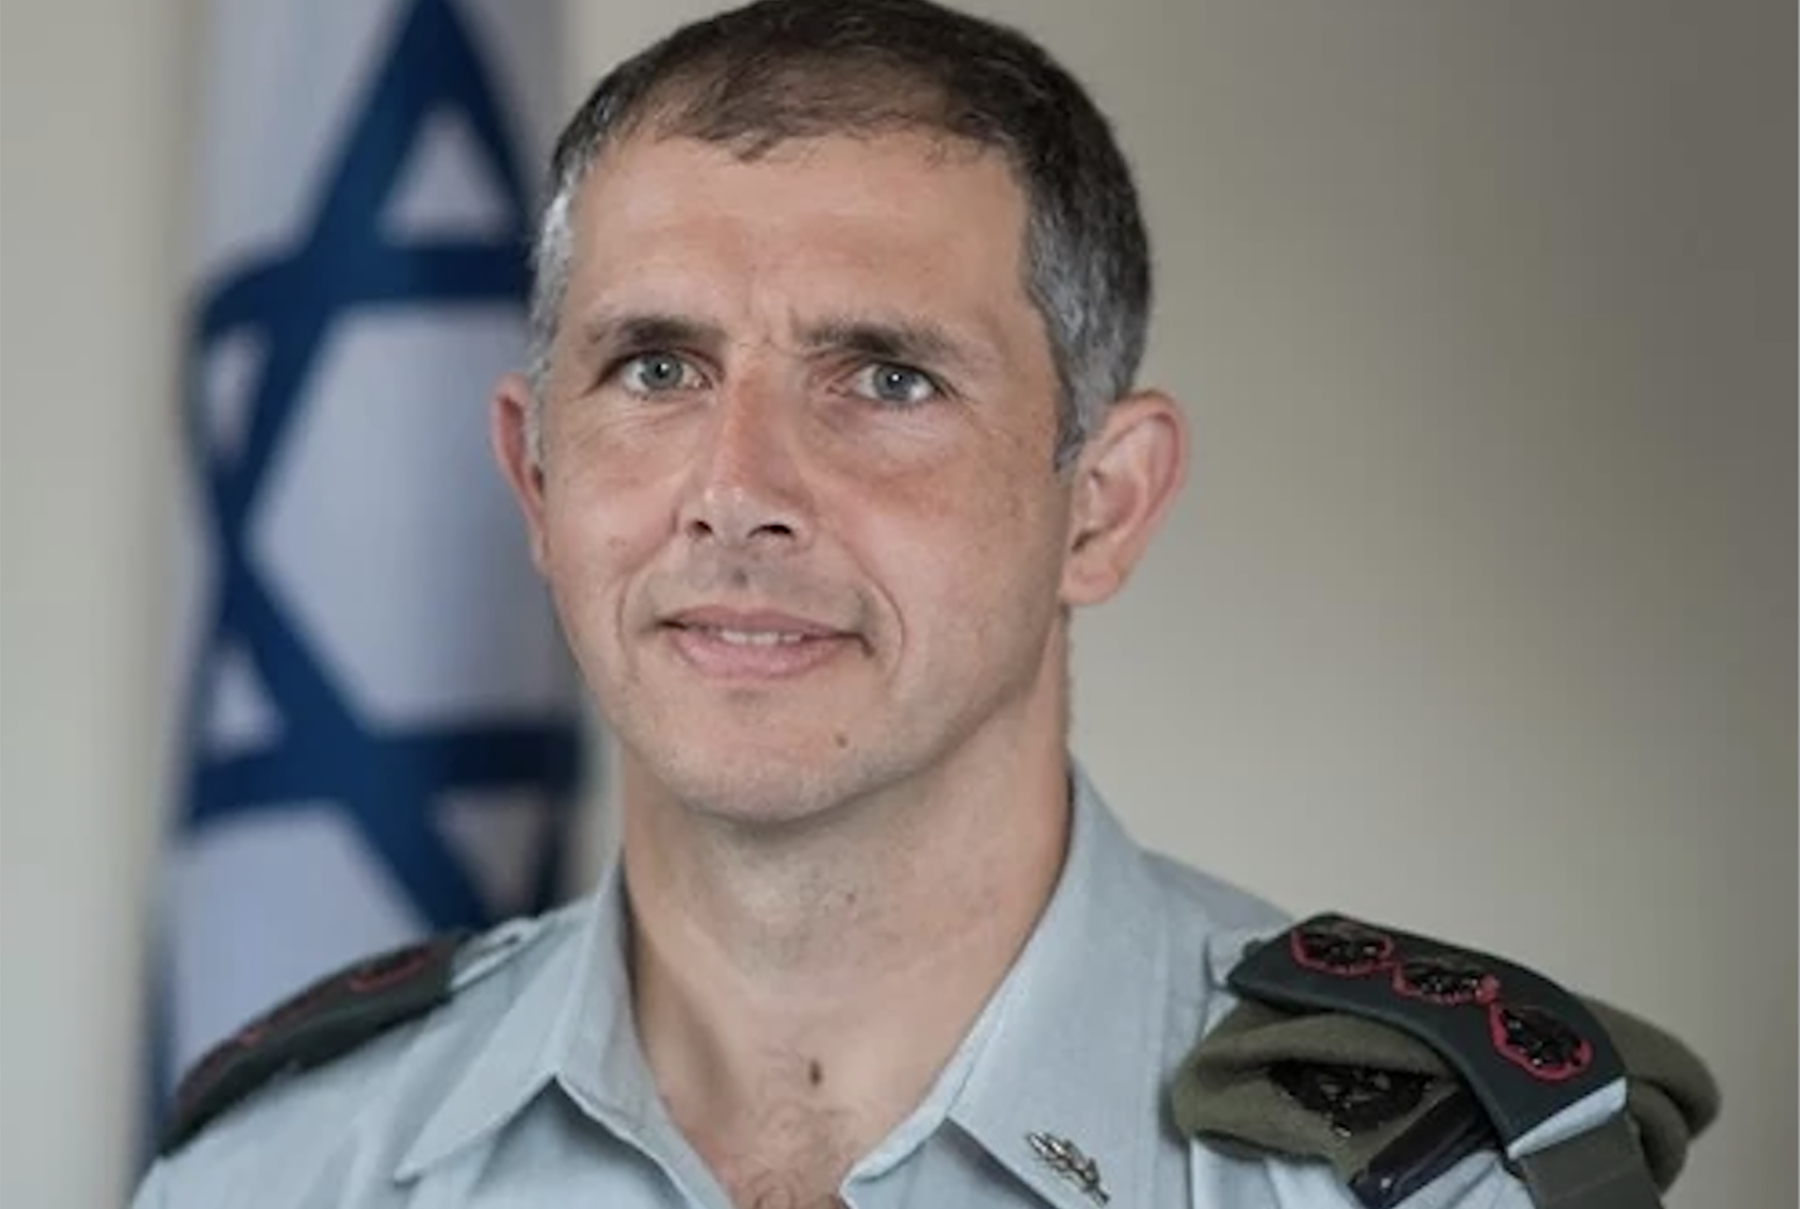 International Criminal Court: Investigate Senior Israeli Army Lawyer for War Crimes, Crimes Against Humanity